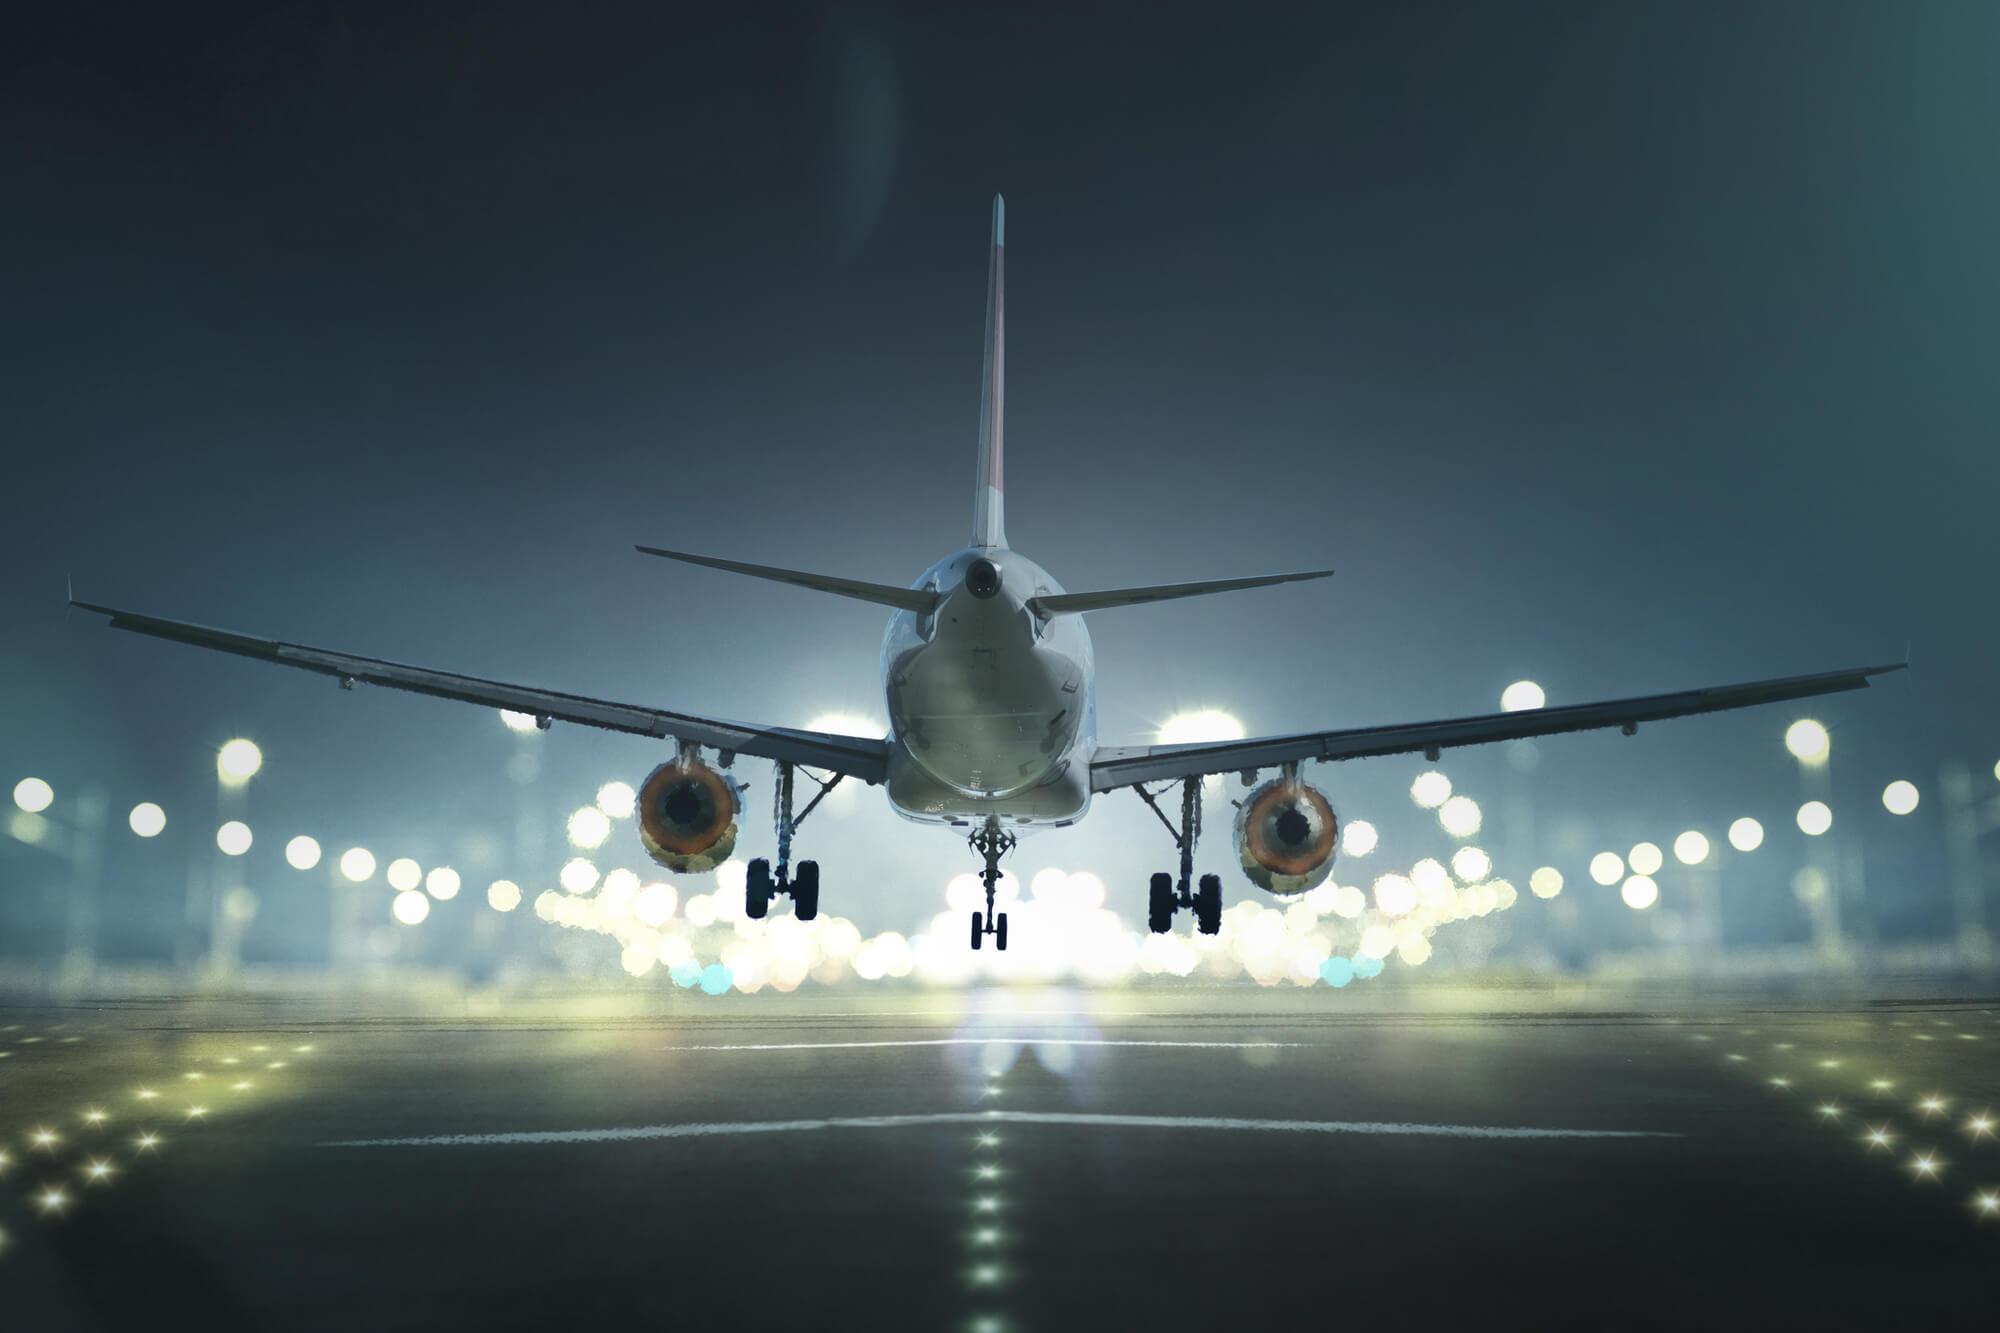 A plane landing on a lit runway at night